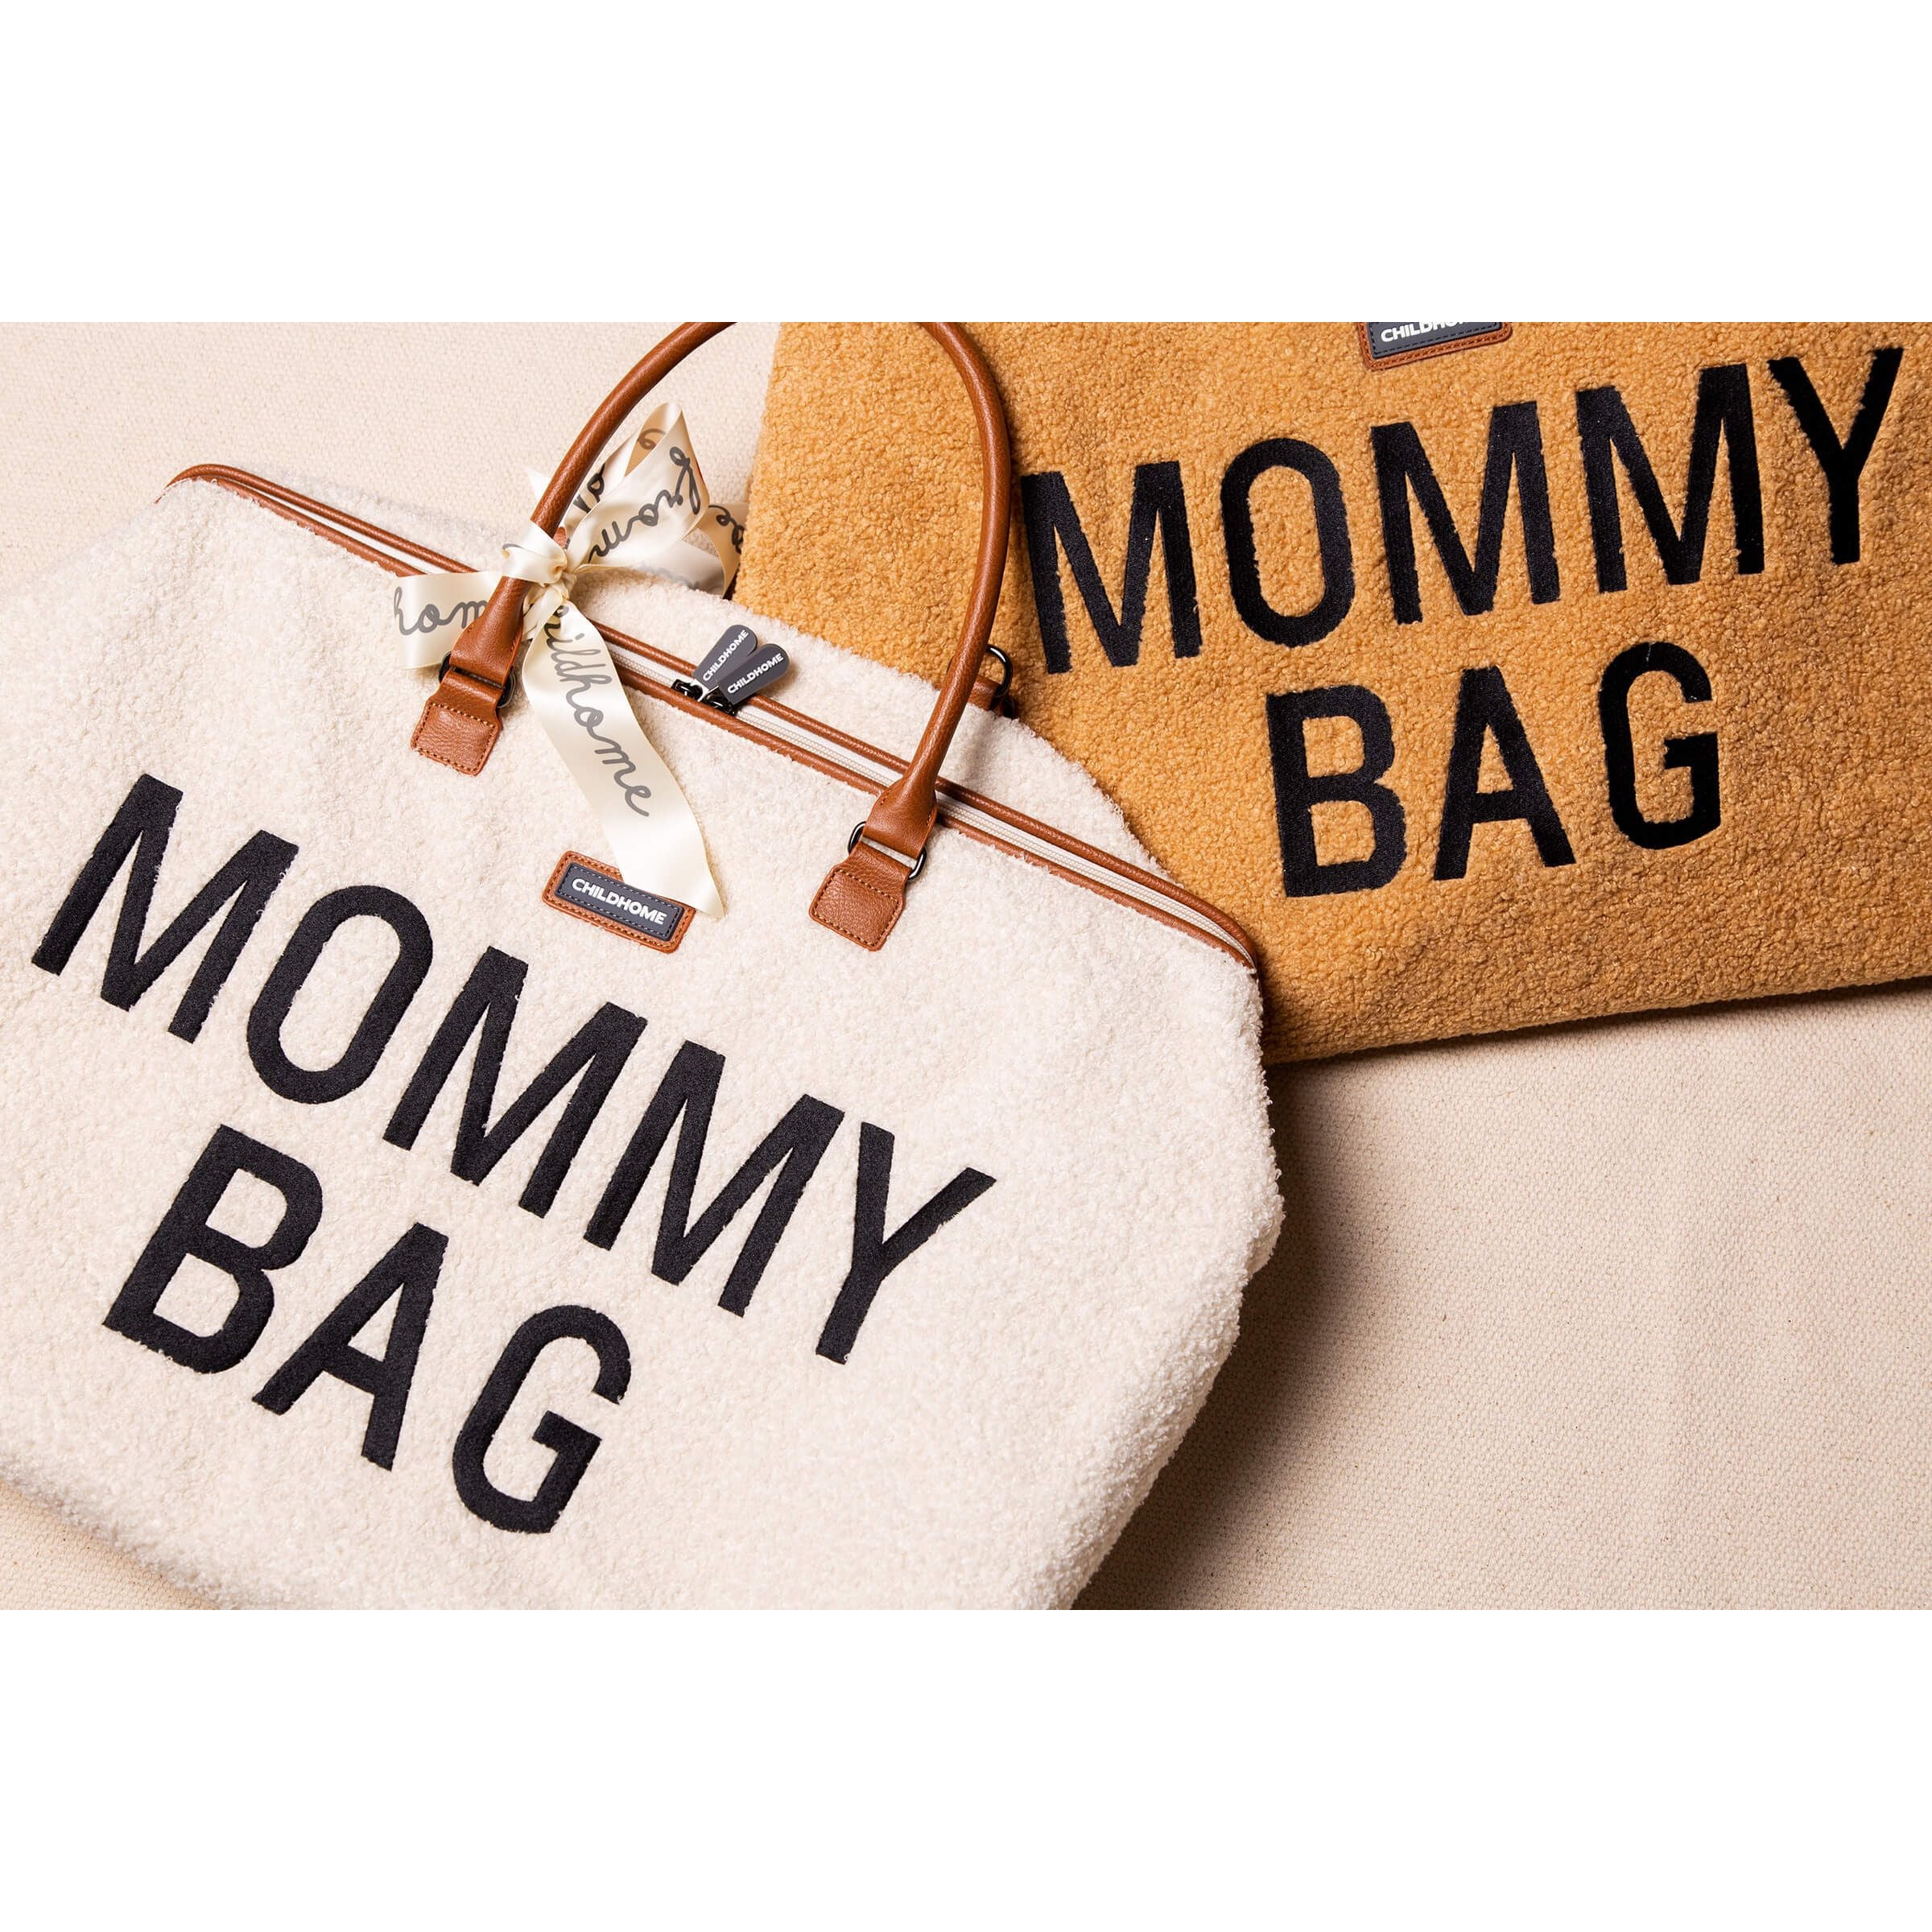 Sac à langer Mommy Bag Teddy écru - Made in Bébé